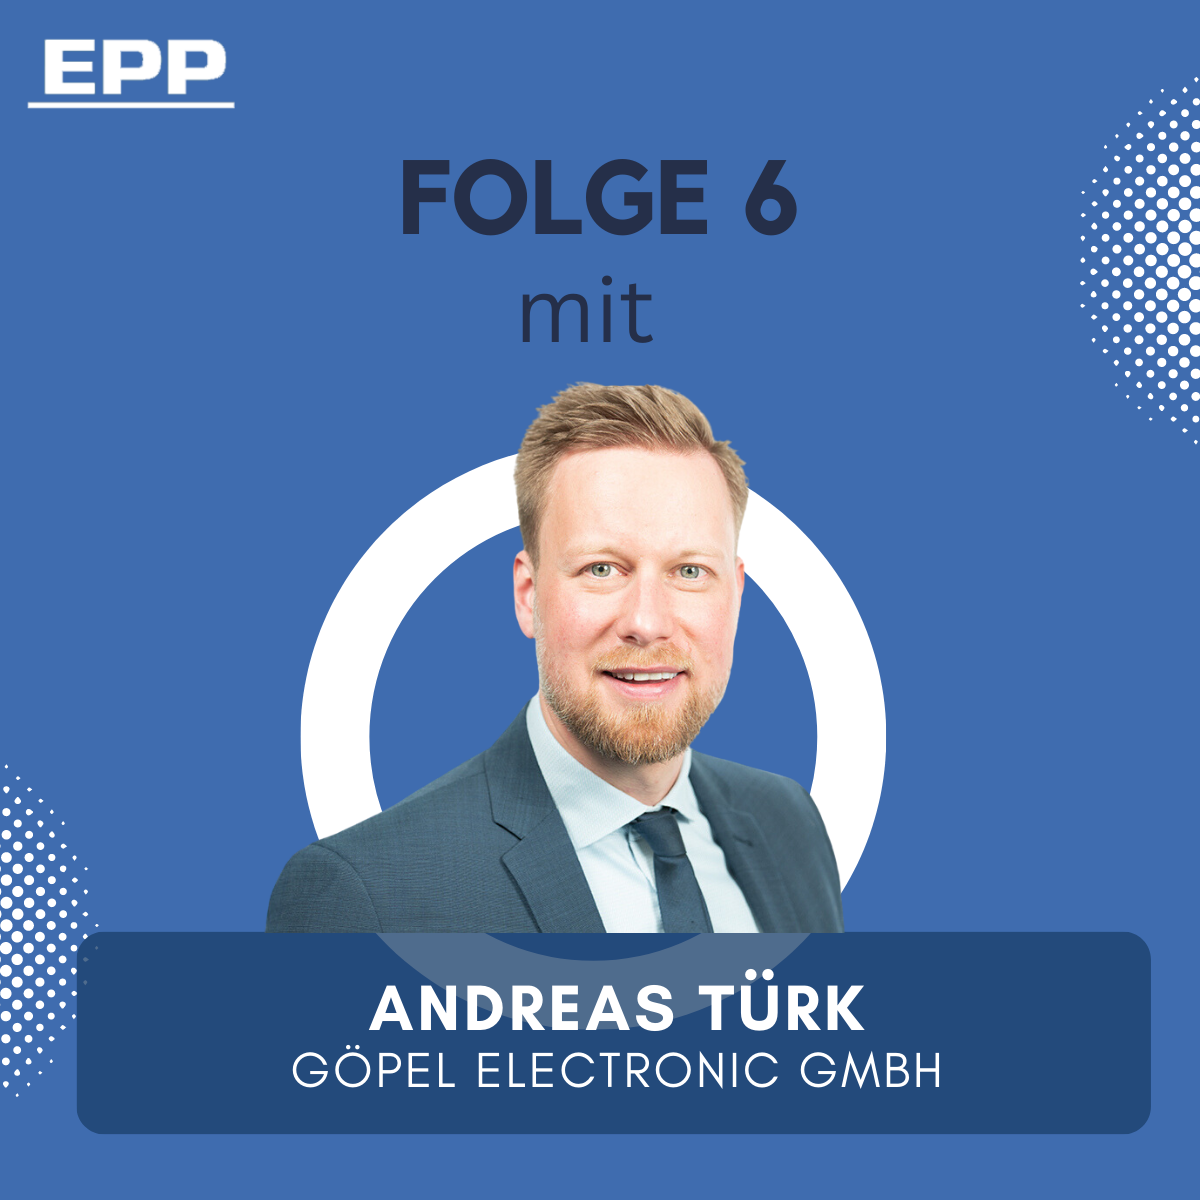 Andreas Türk, Göpel electronic, Podcast, Elektronikfertigung, KI, Künstliche Intelligenz